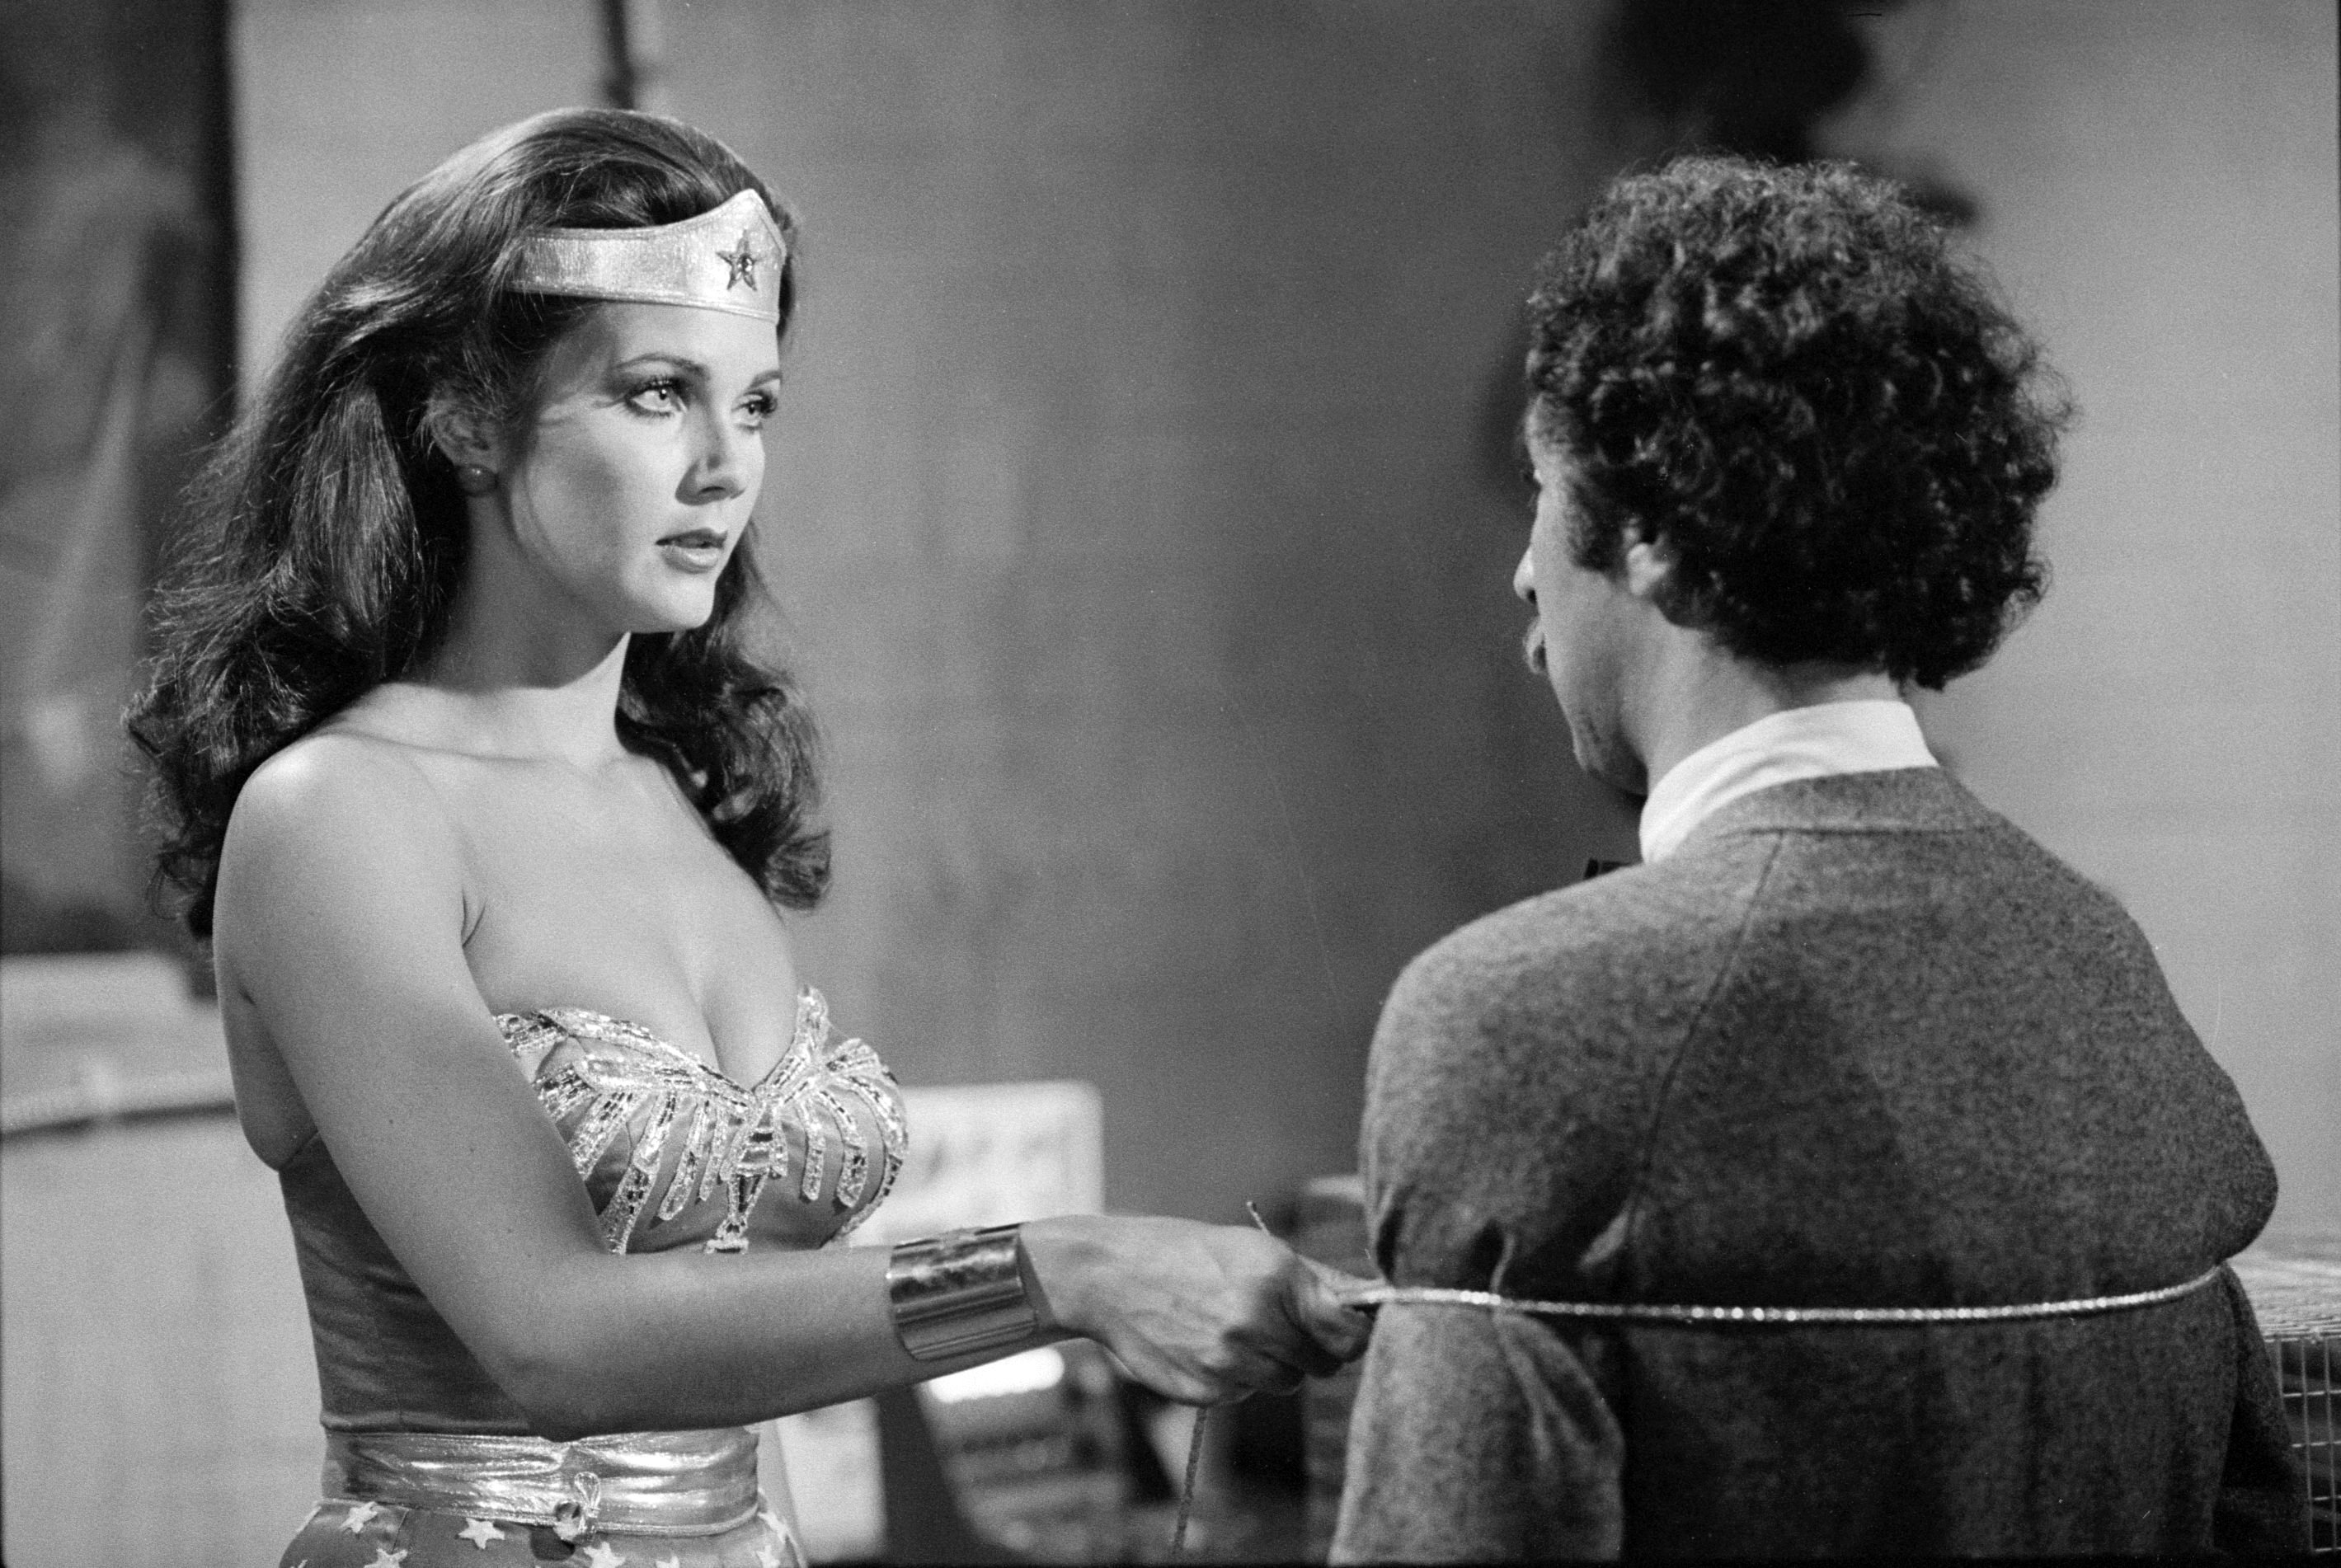 Lynda Carter as Wonder Woman with a man